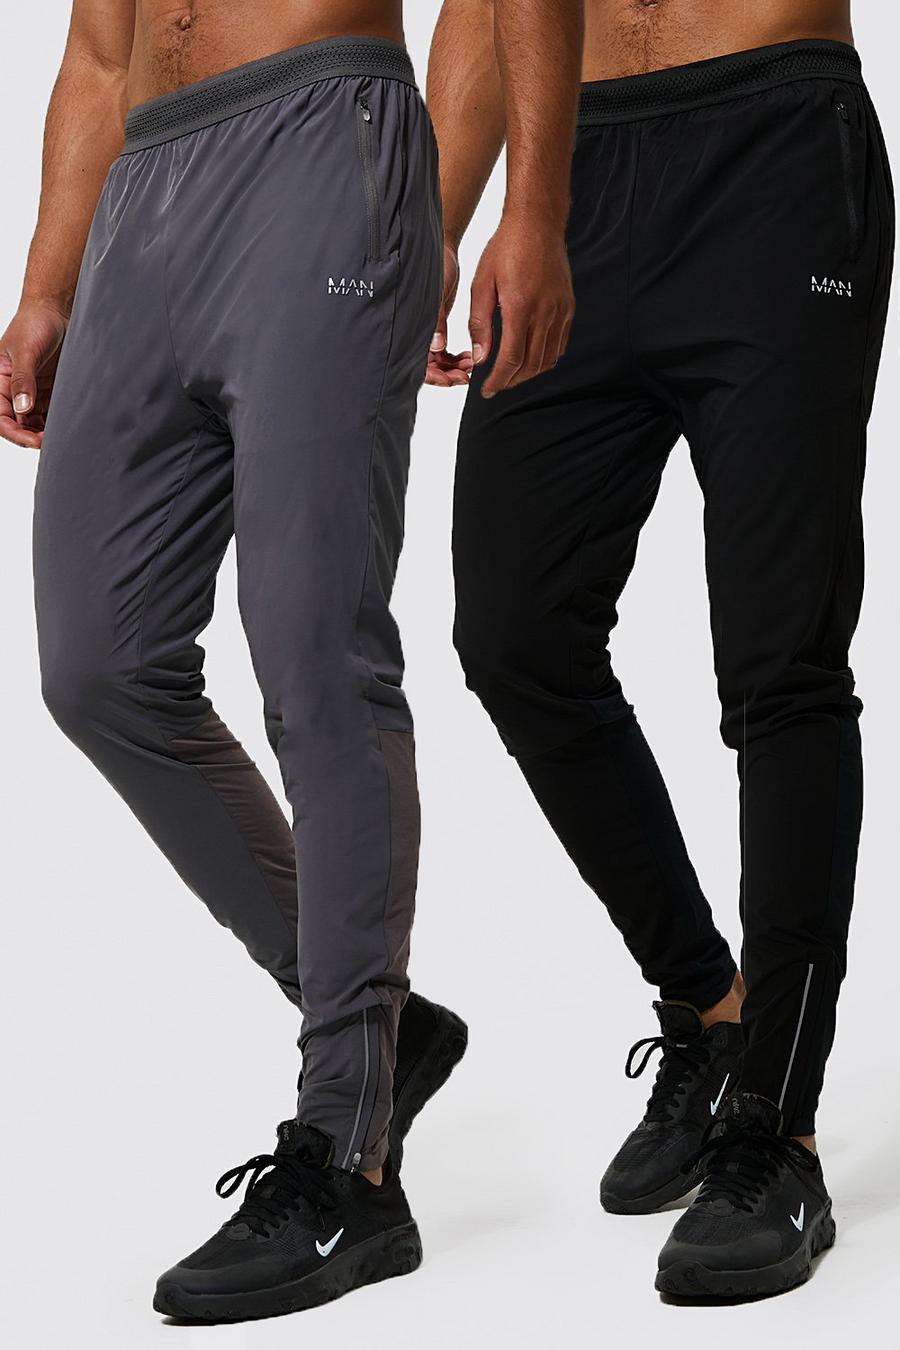 Pack de 2 pantalones de chándal Tall MAN Active deportivos ligeros, Black nero